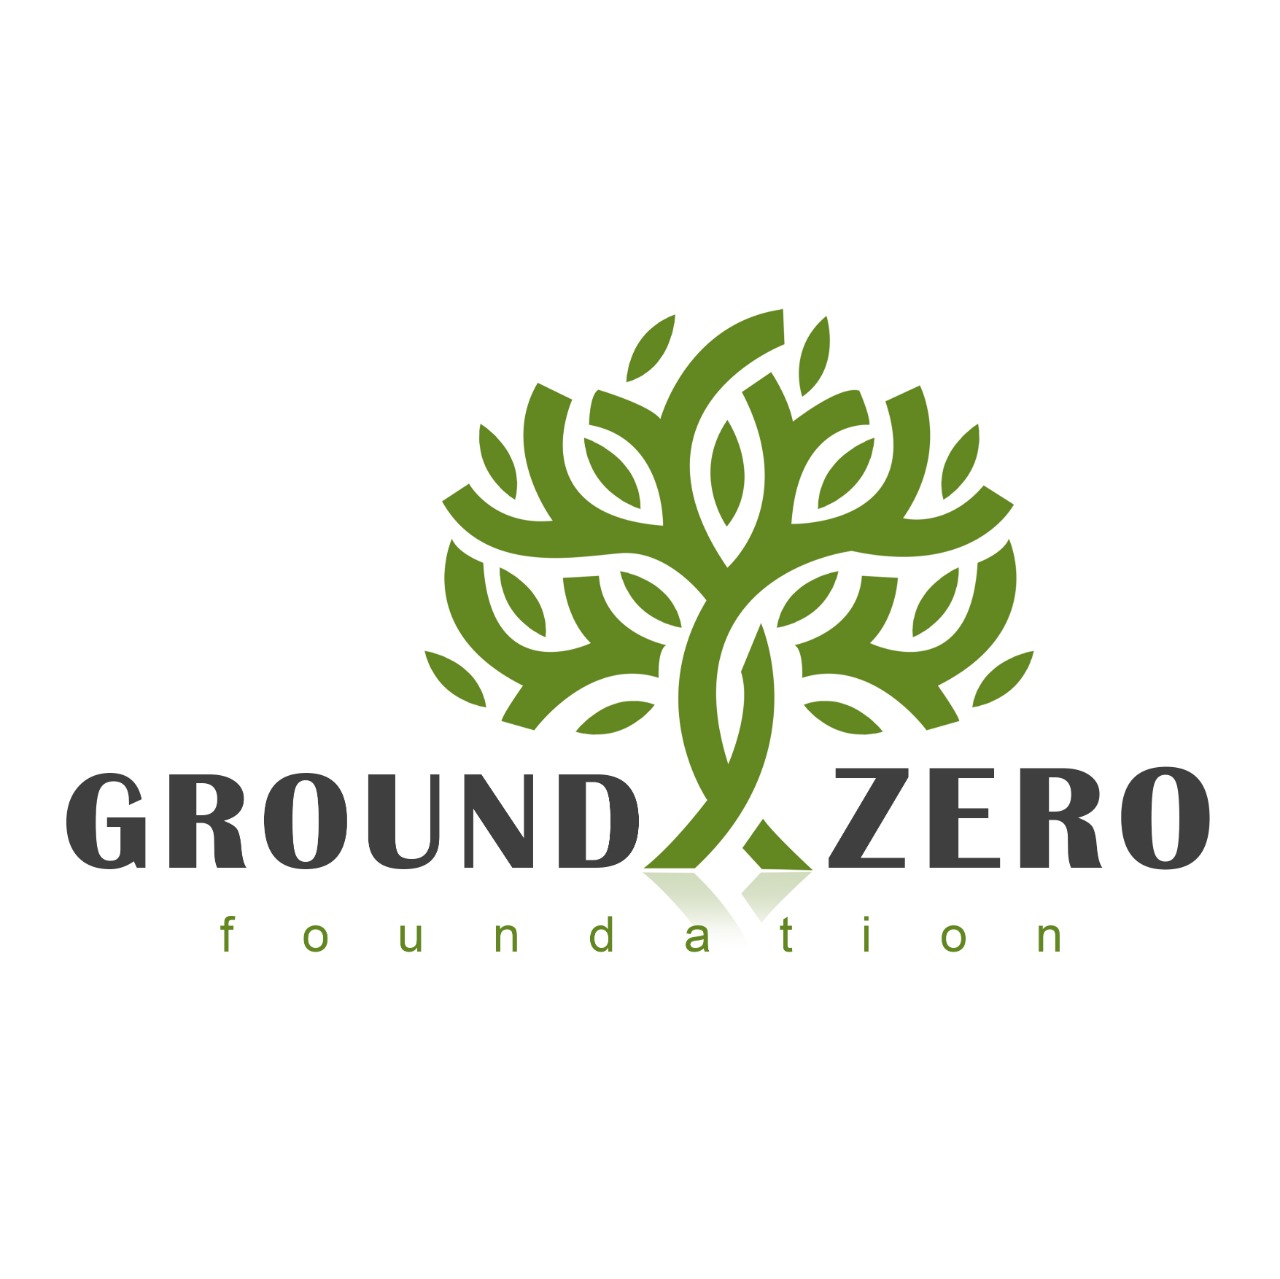 GROUND ZERO FOUNDATION